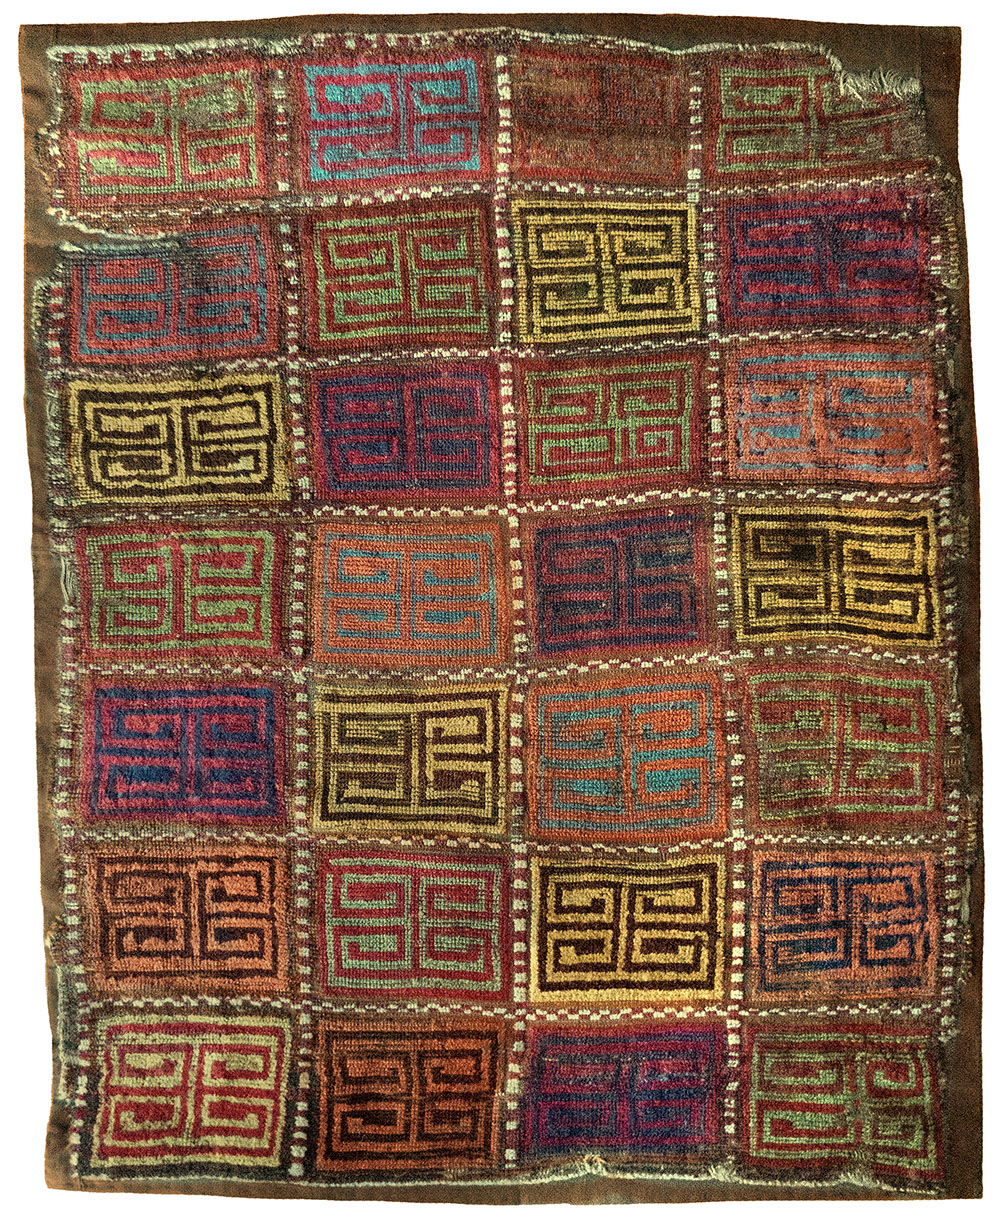 East-central Anatolian rug fragment, Sivas region, 18th century or earlier. 1.19 x 1.57 m (3' 11" x 5' 2")